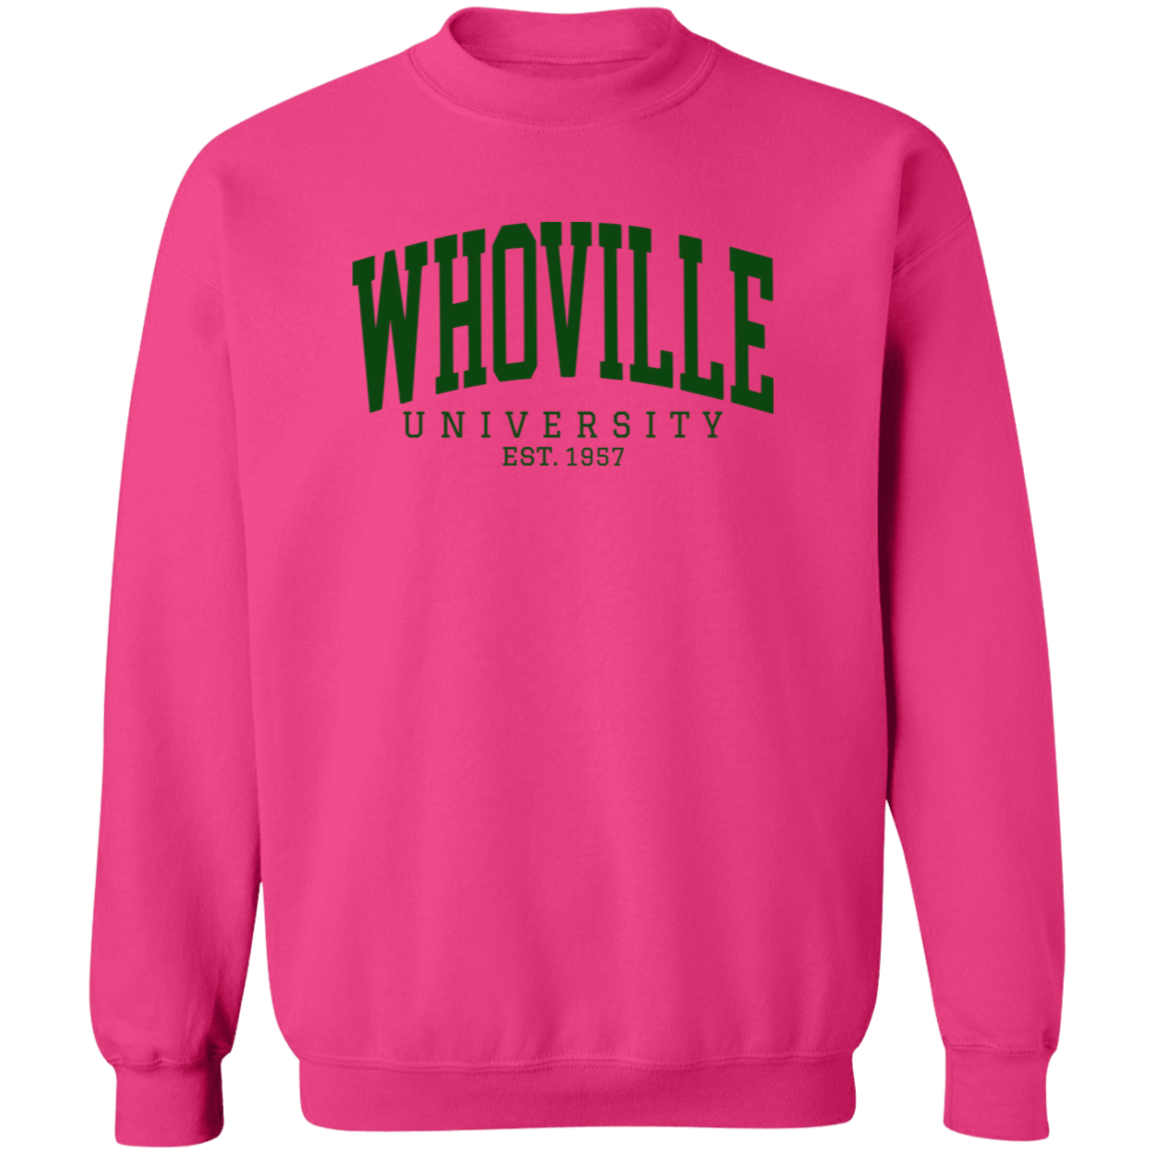 Whoville University Sweatshirt